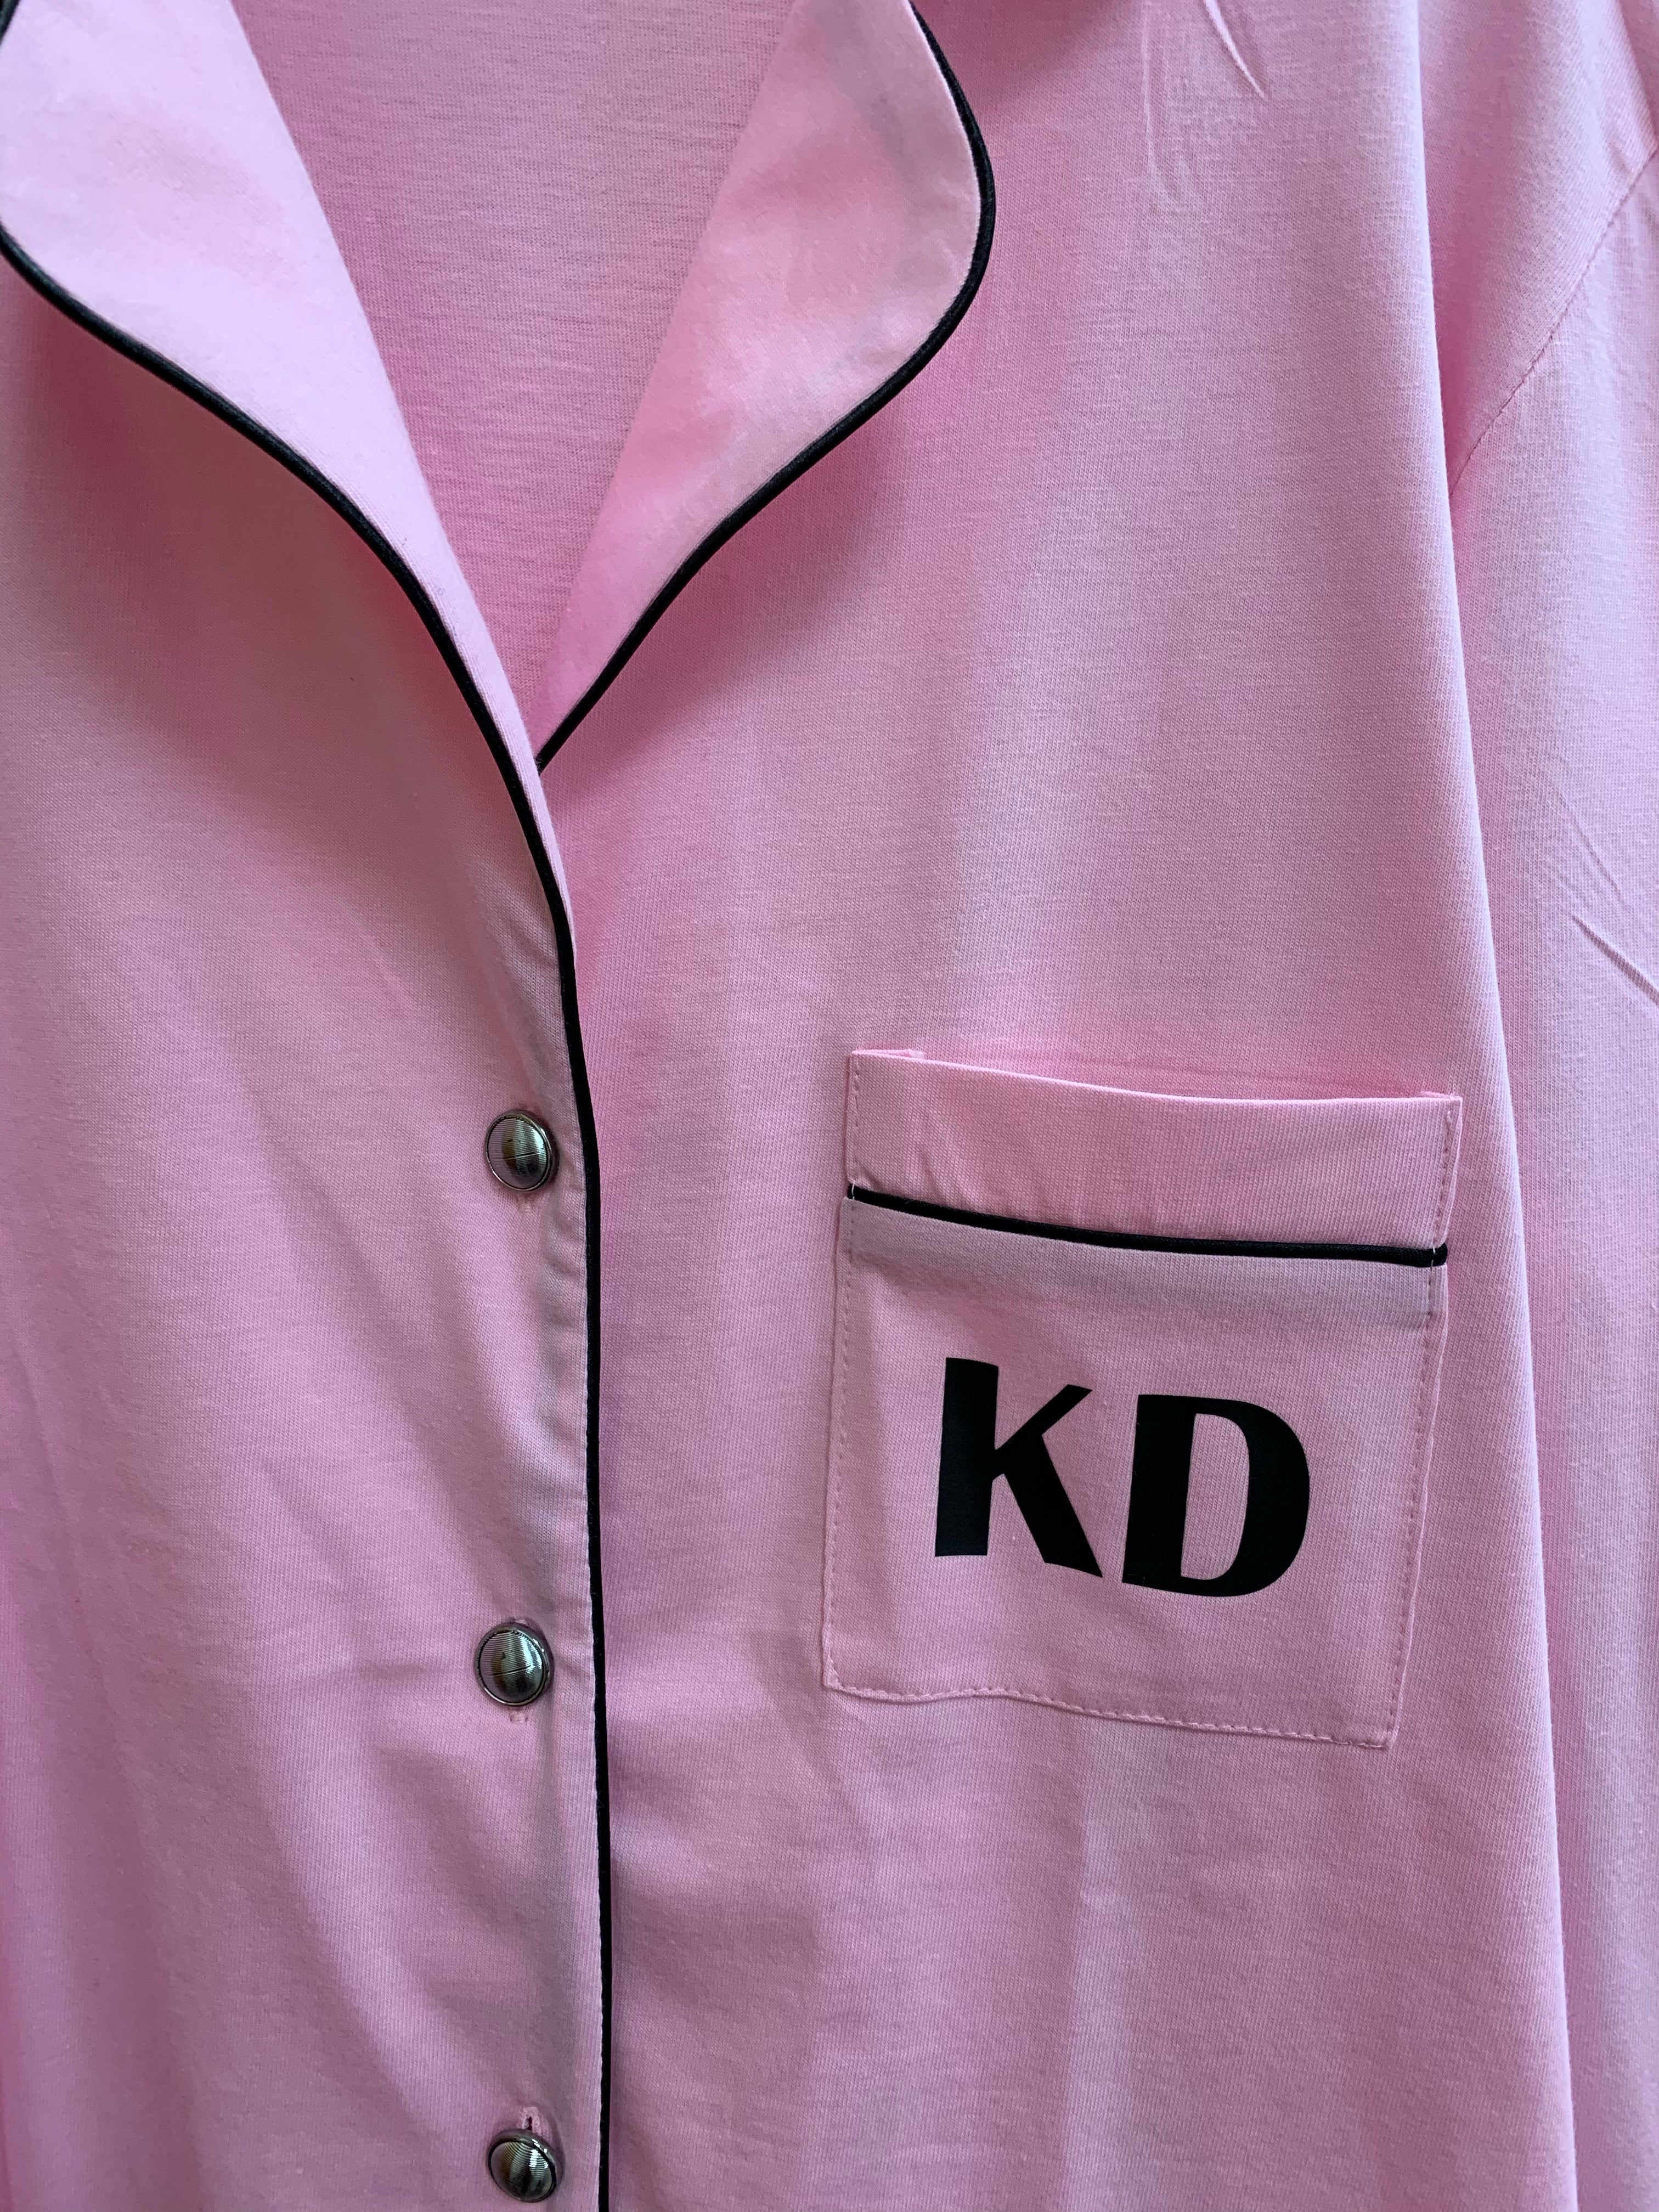 Adult Pink Cotton Shirt